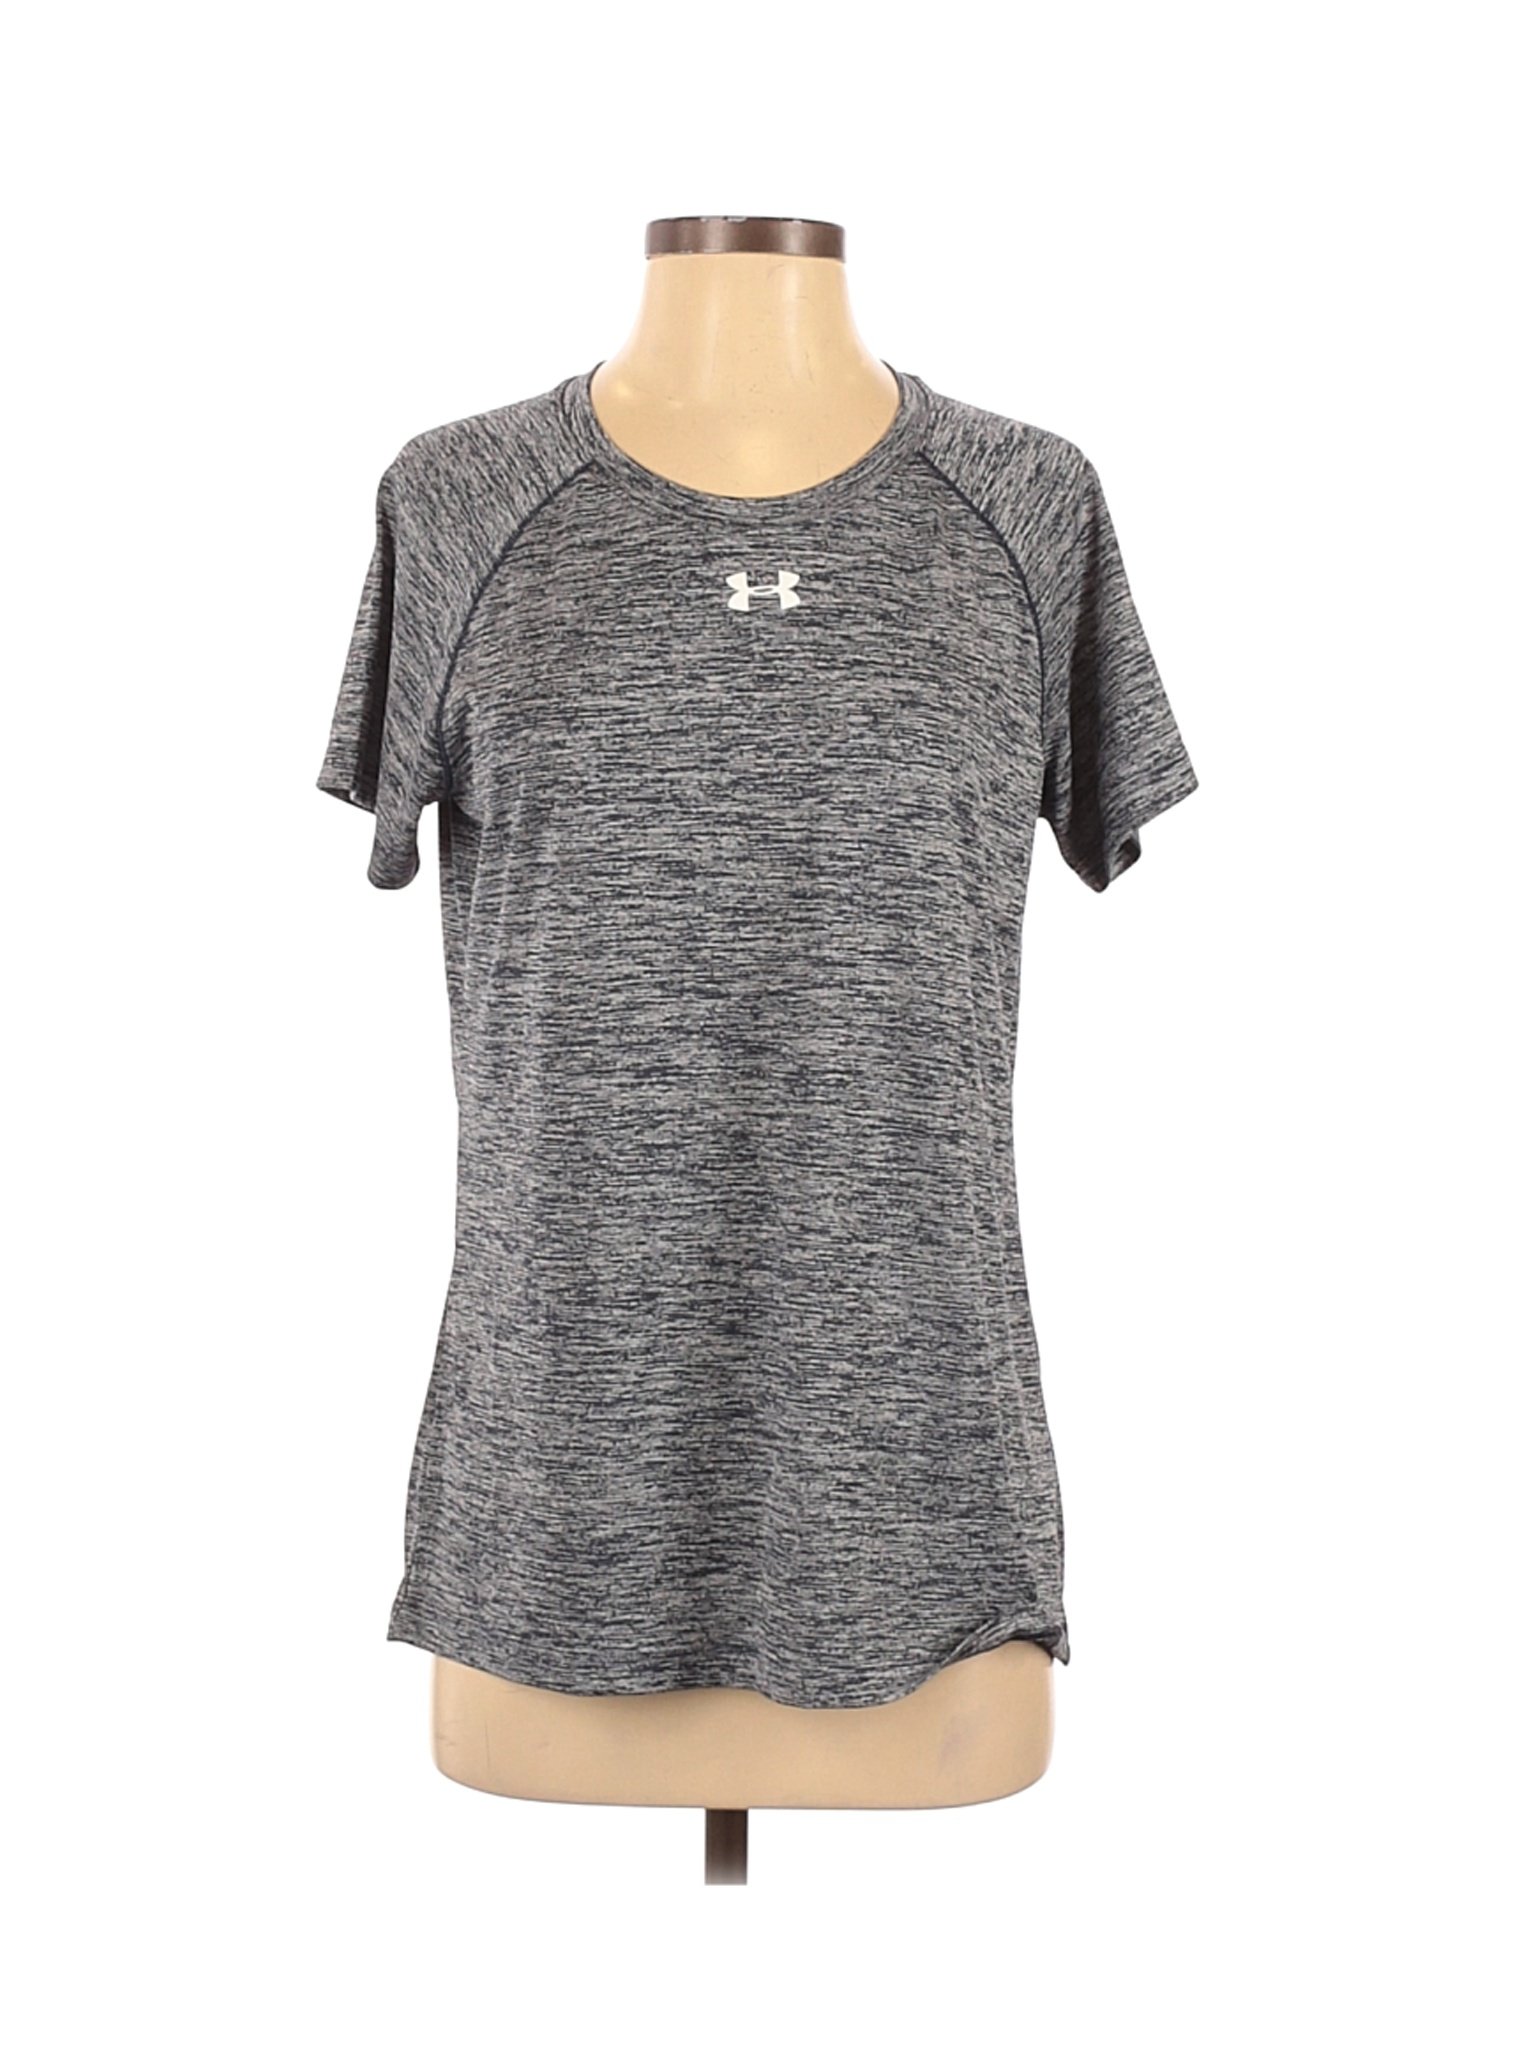 Heat Gear by Under Armour Women Gray Active T-Shirt S | eBay